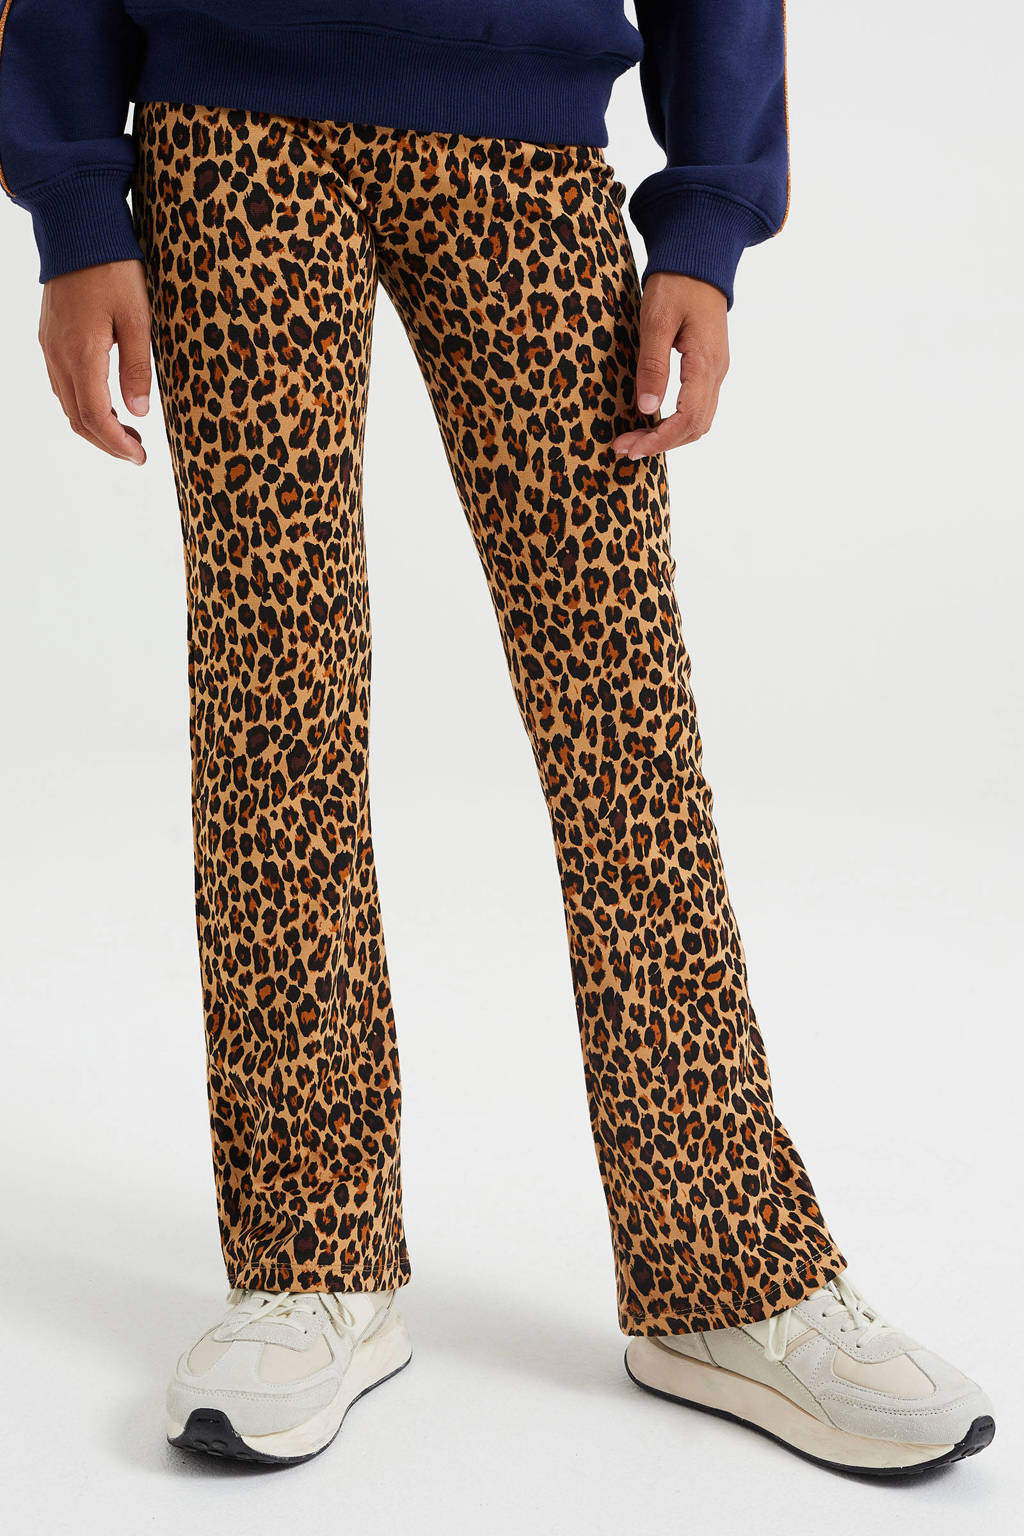 Lezen Ongemak trommel WE Fashion flared broek met panterprint bruin/zwart | wehkamp